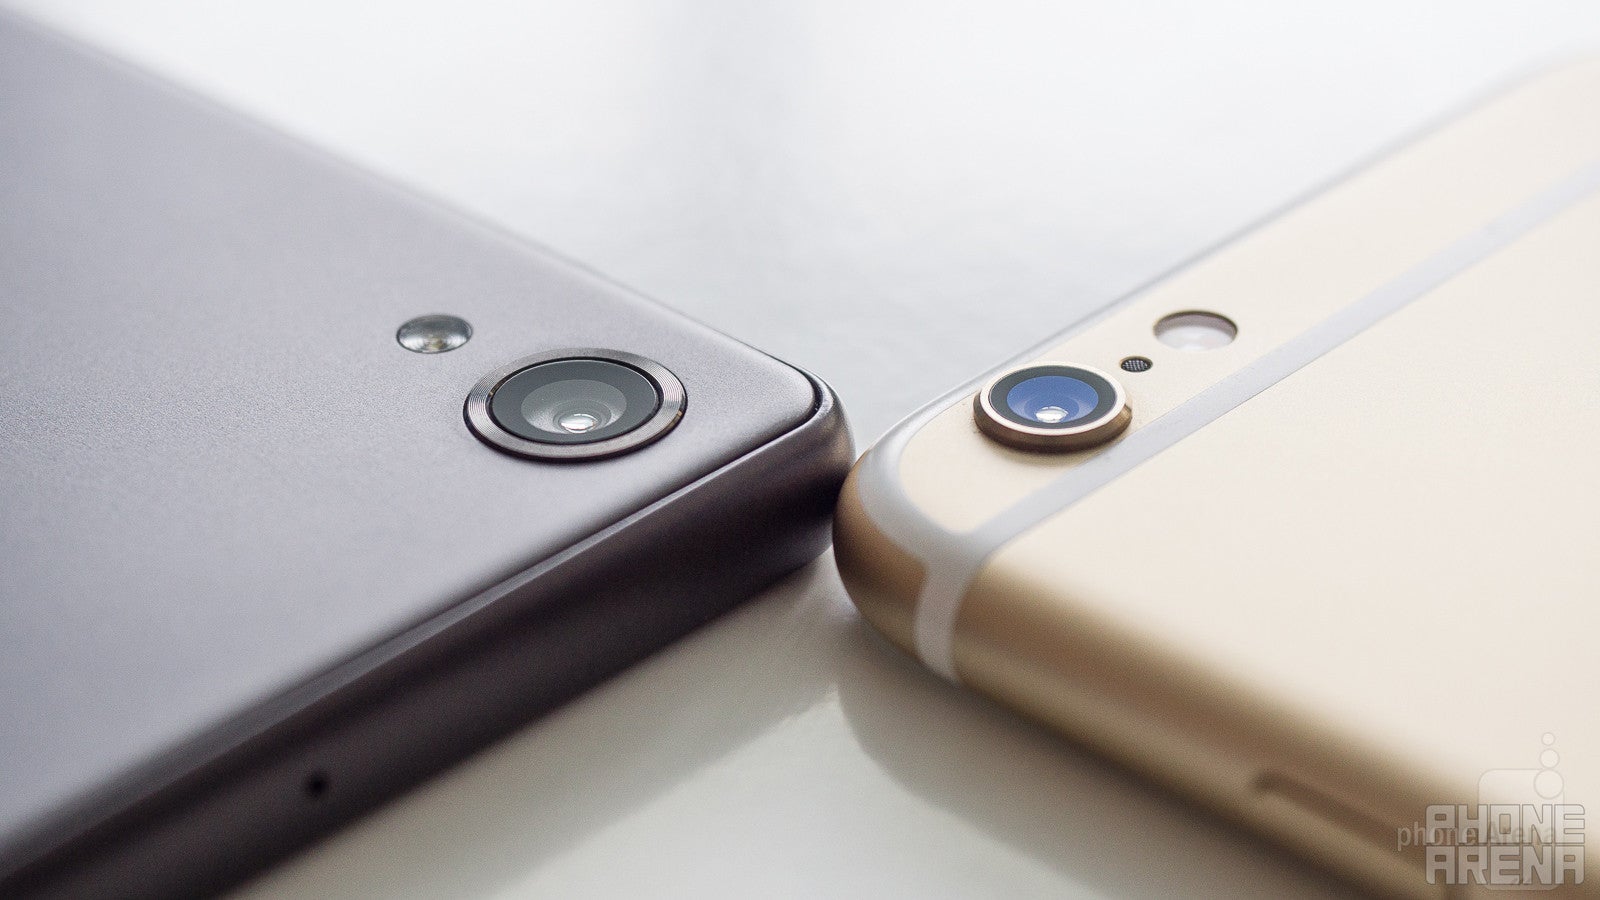 Sony Xperia X vs Apple iPhone 6s